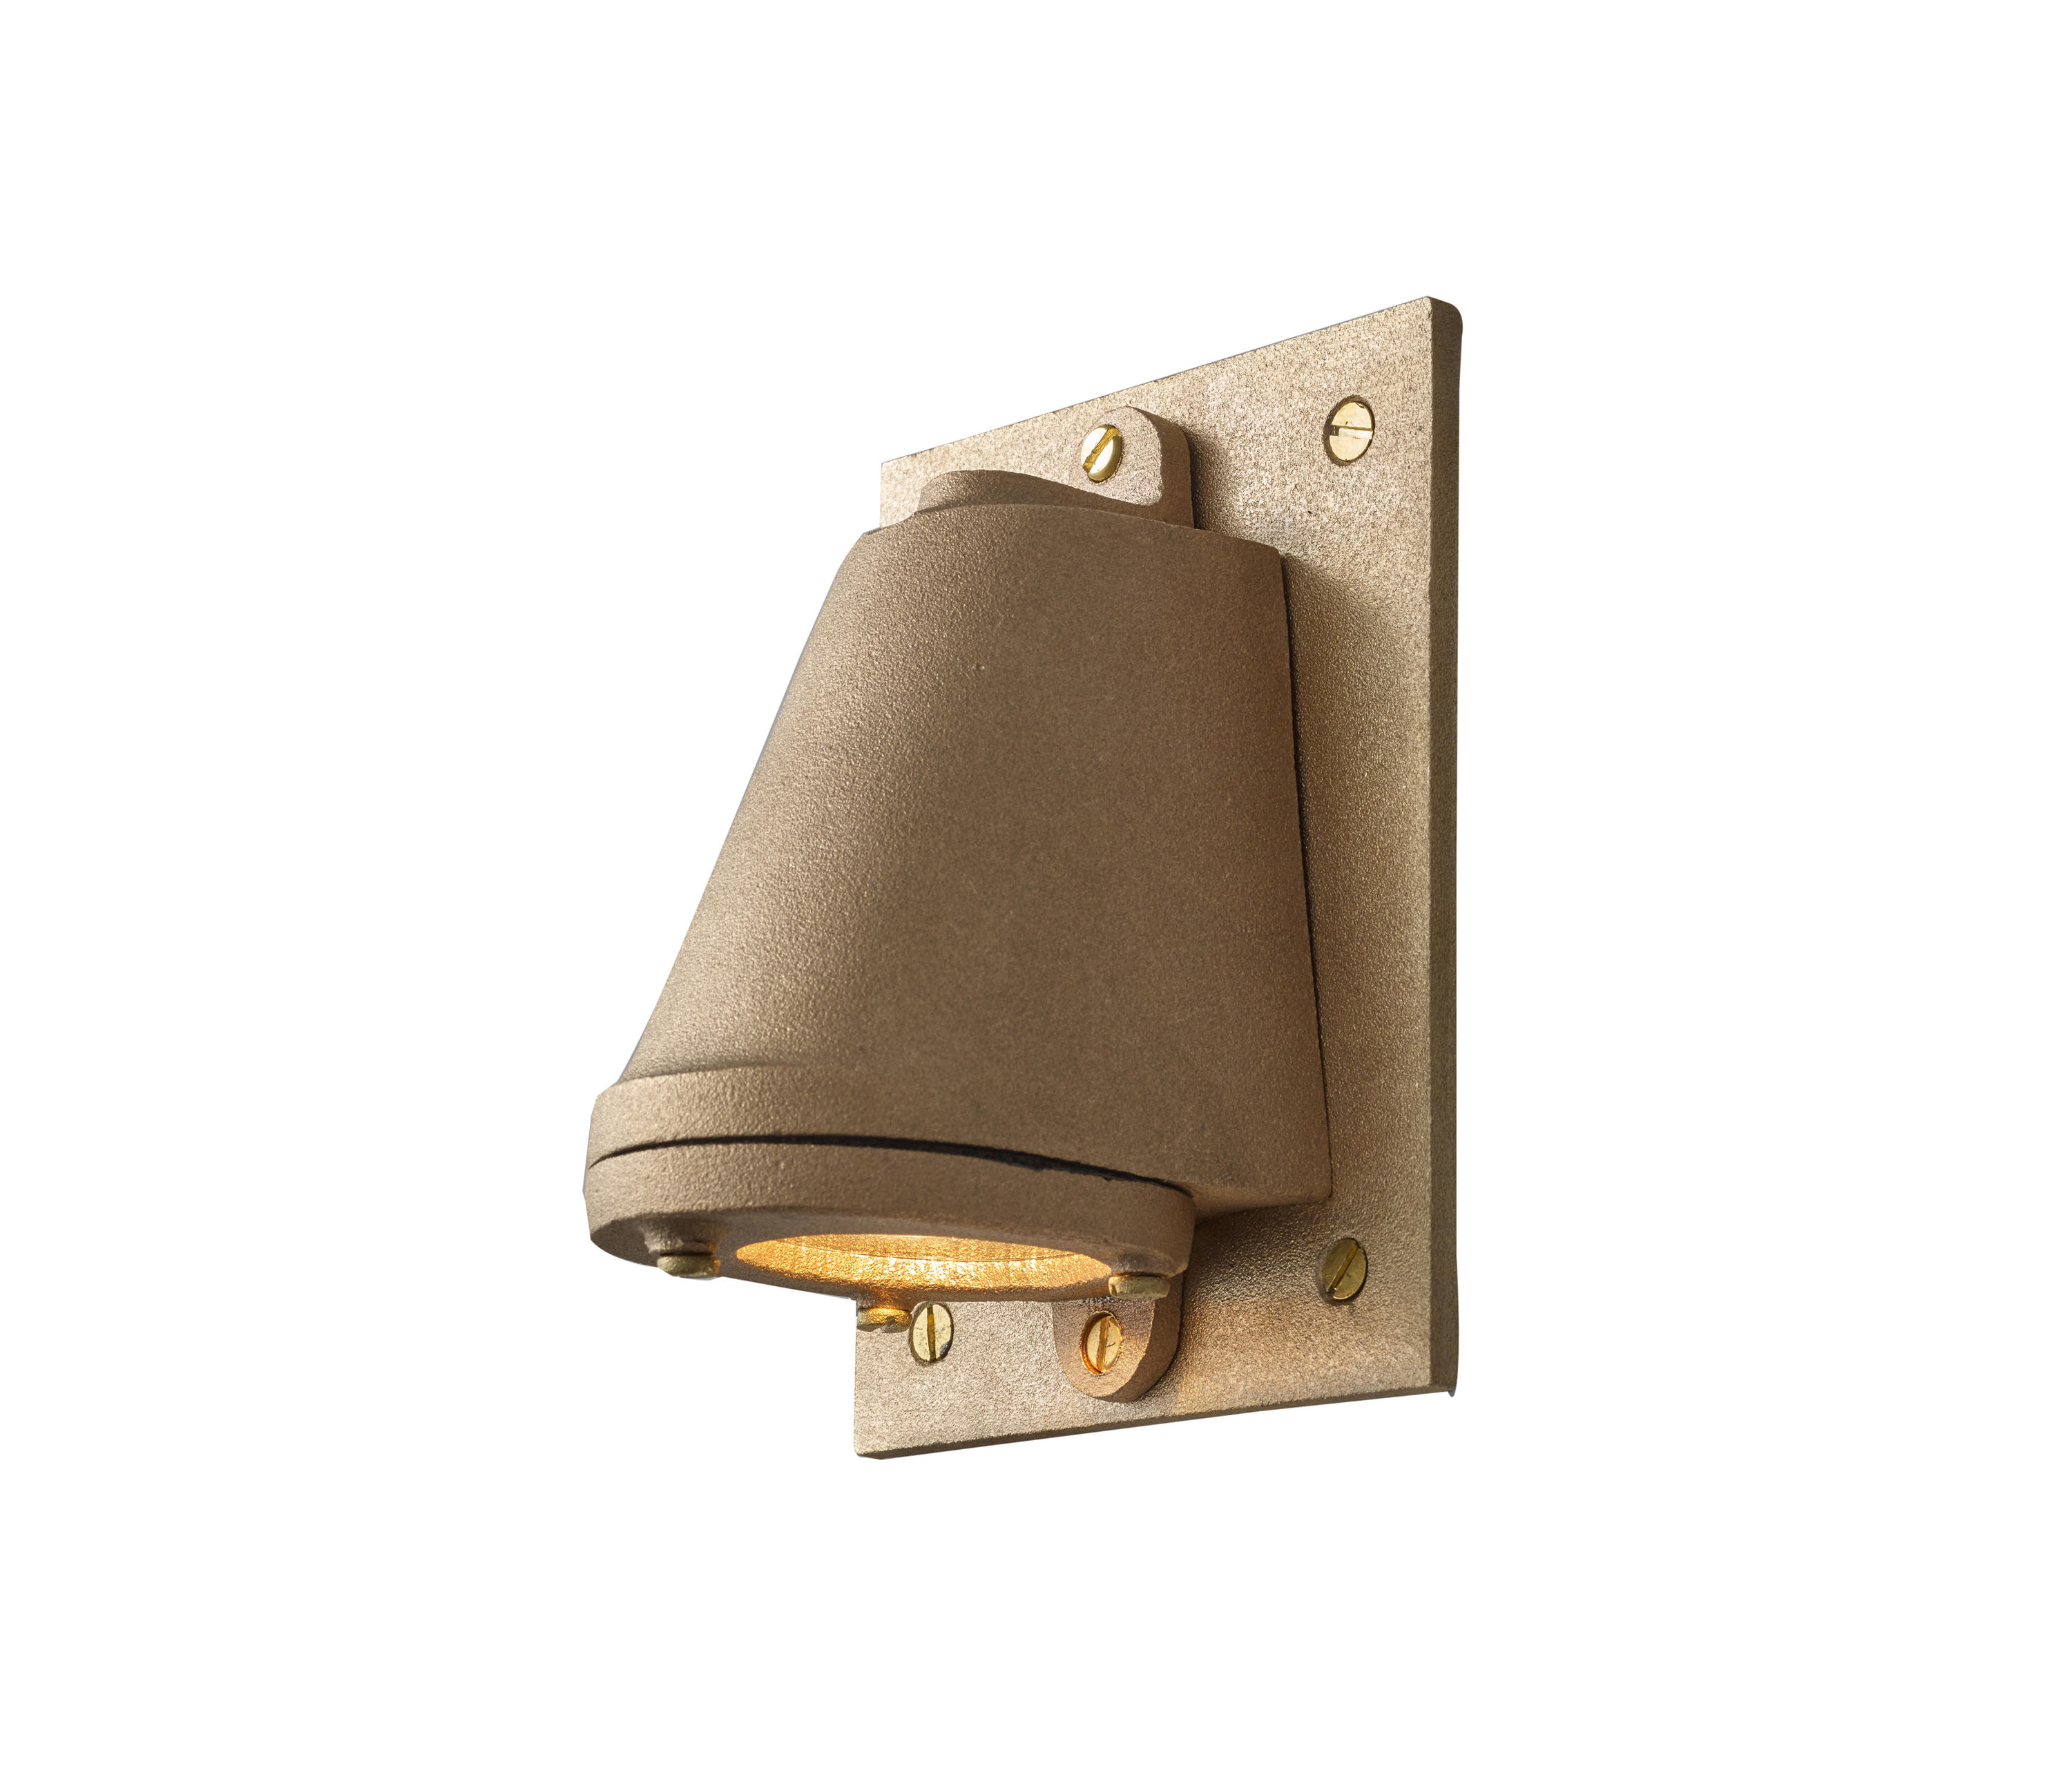 0749 Mast Light, mains voltage LED, Bronze | Architonic